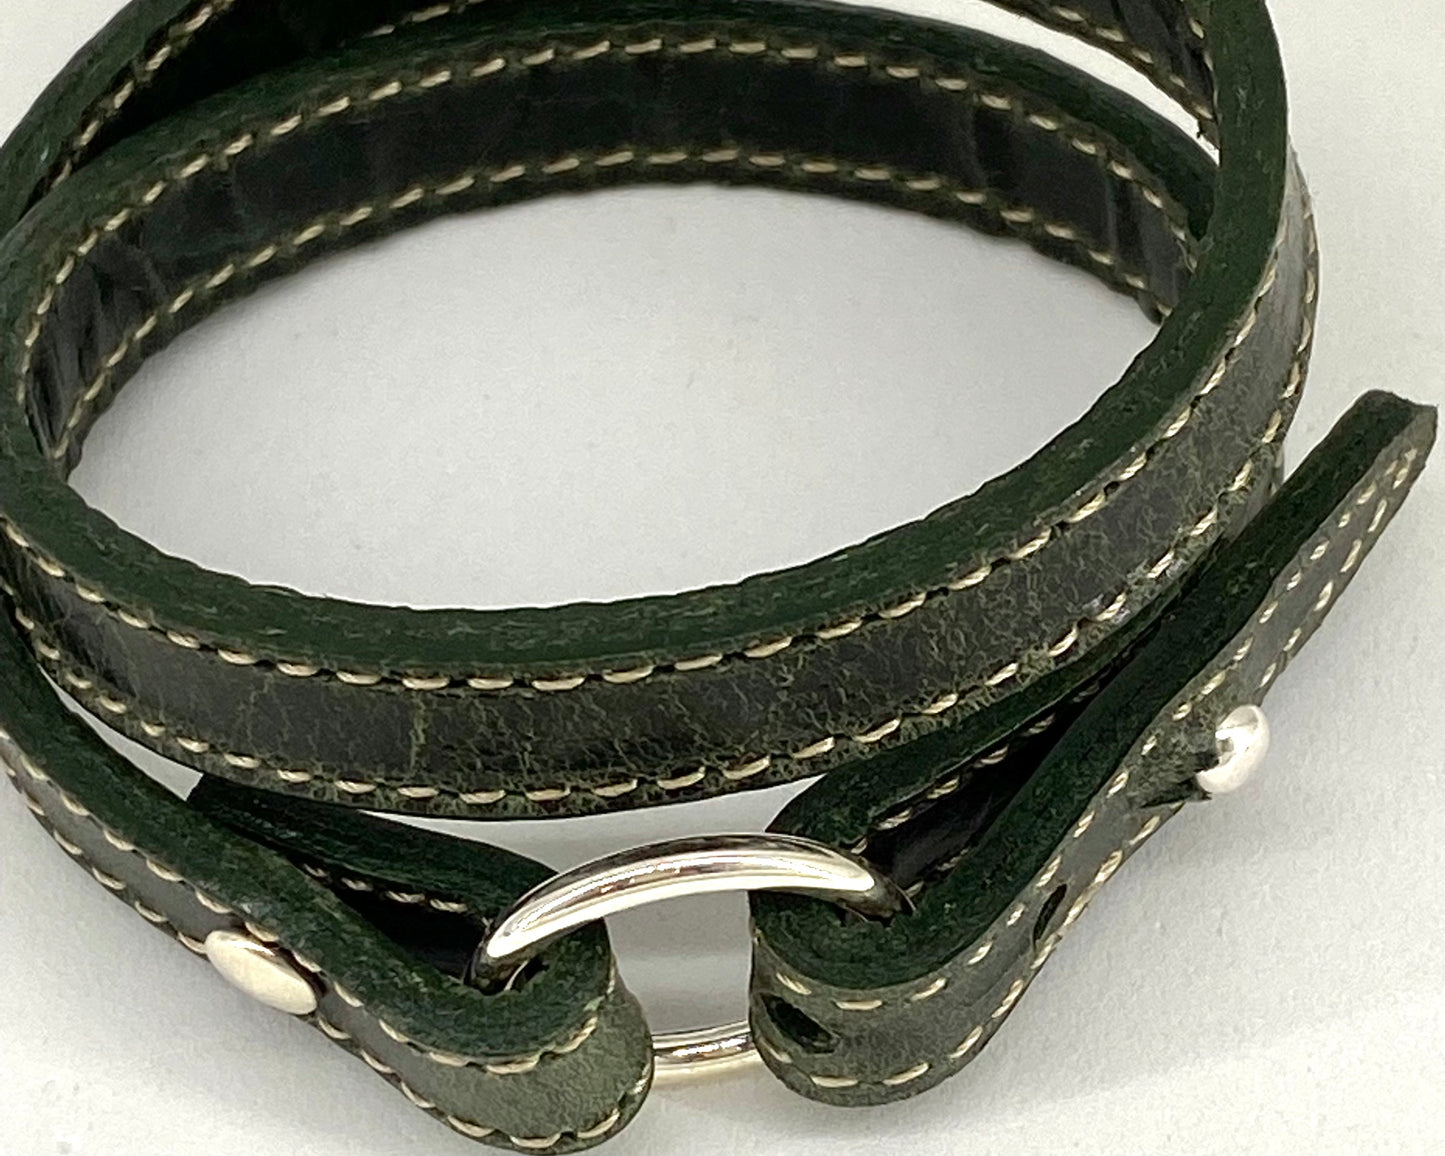 Circle Wrap Leather Bracelet